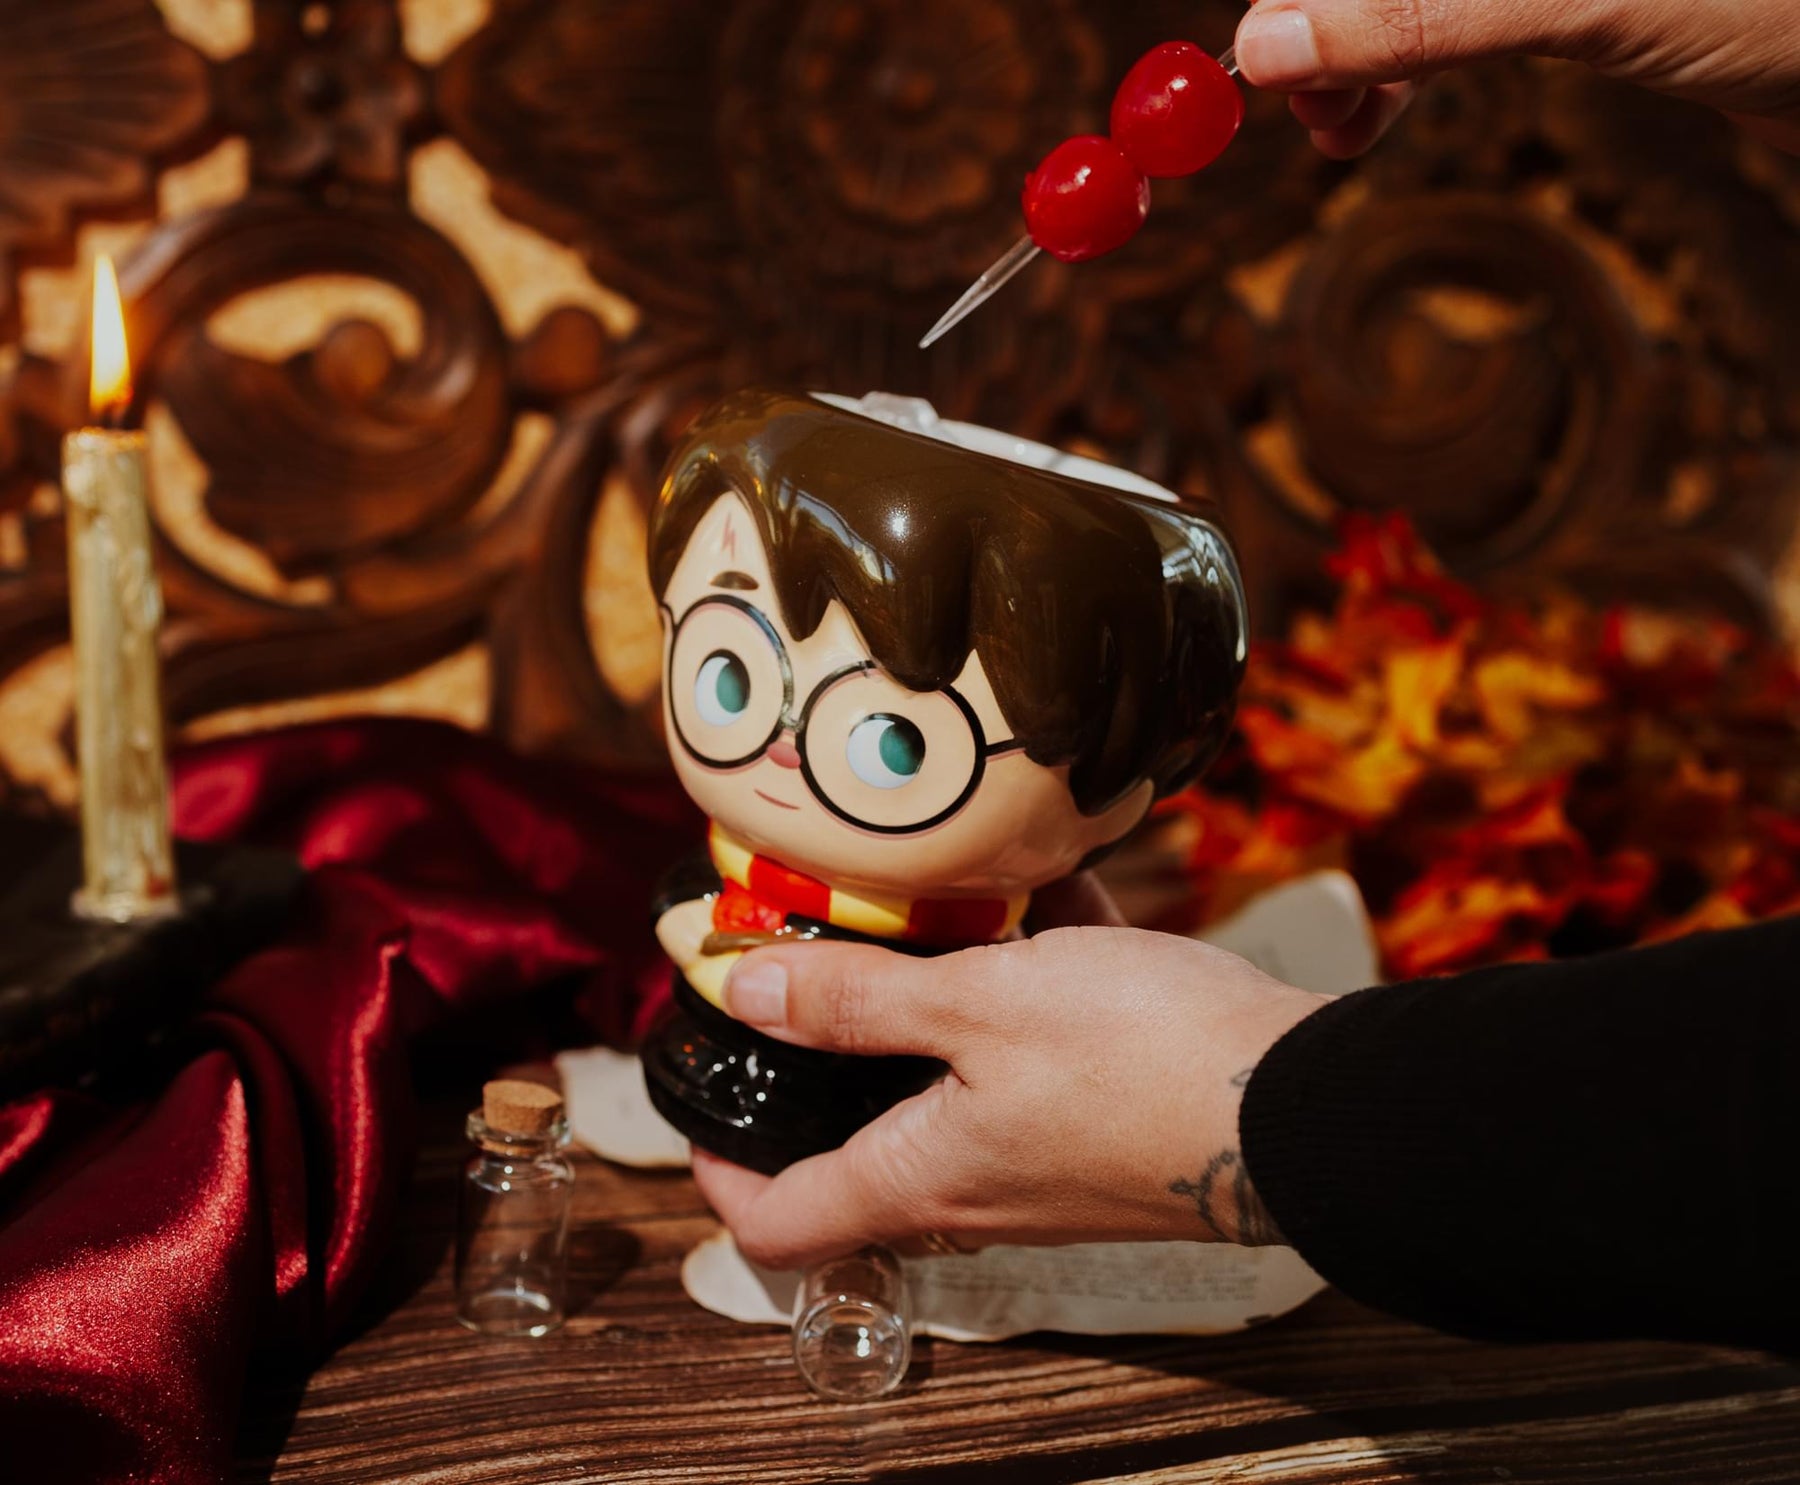 Cupful Of Cute Harry Potter Ceramic Mug | Holds 16 Ounces